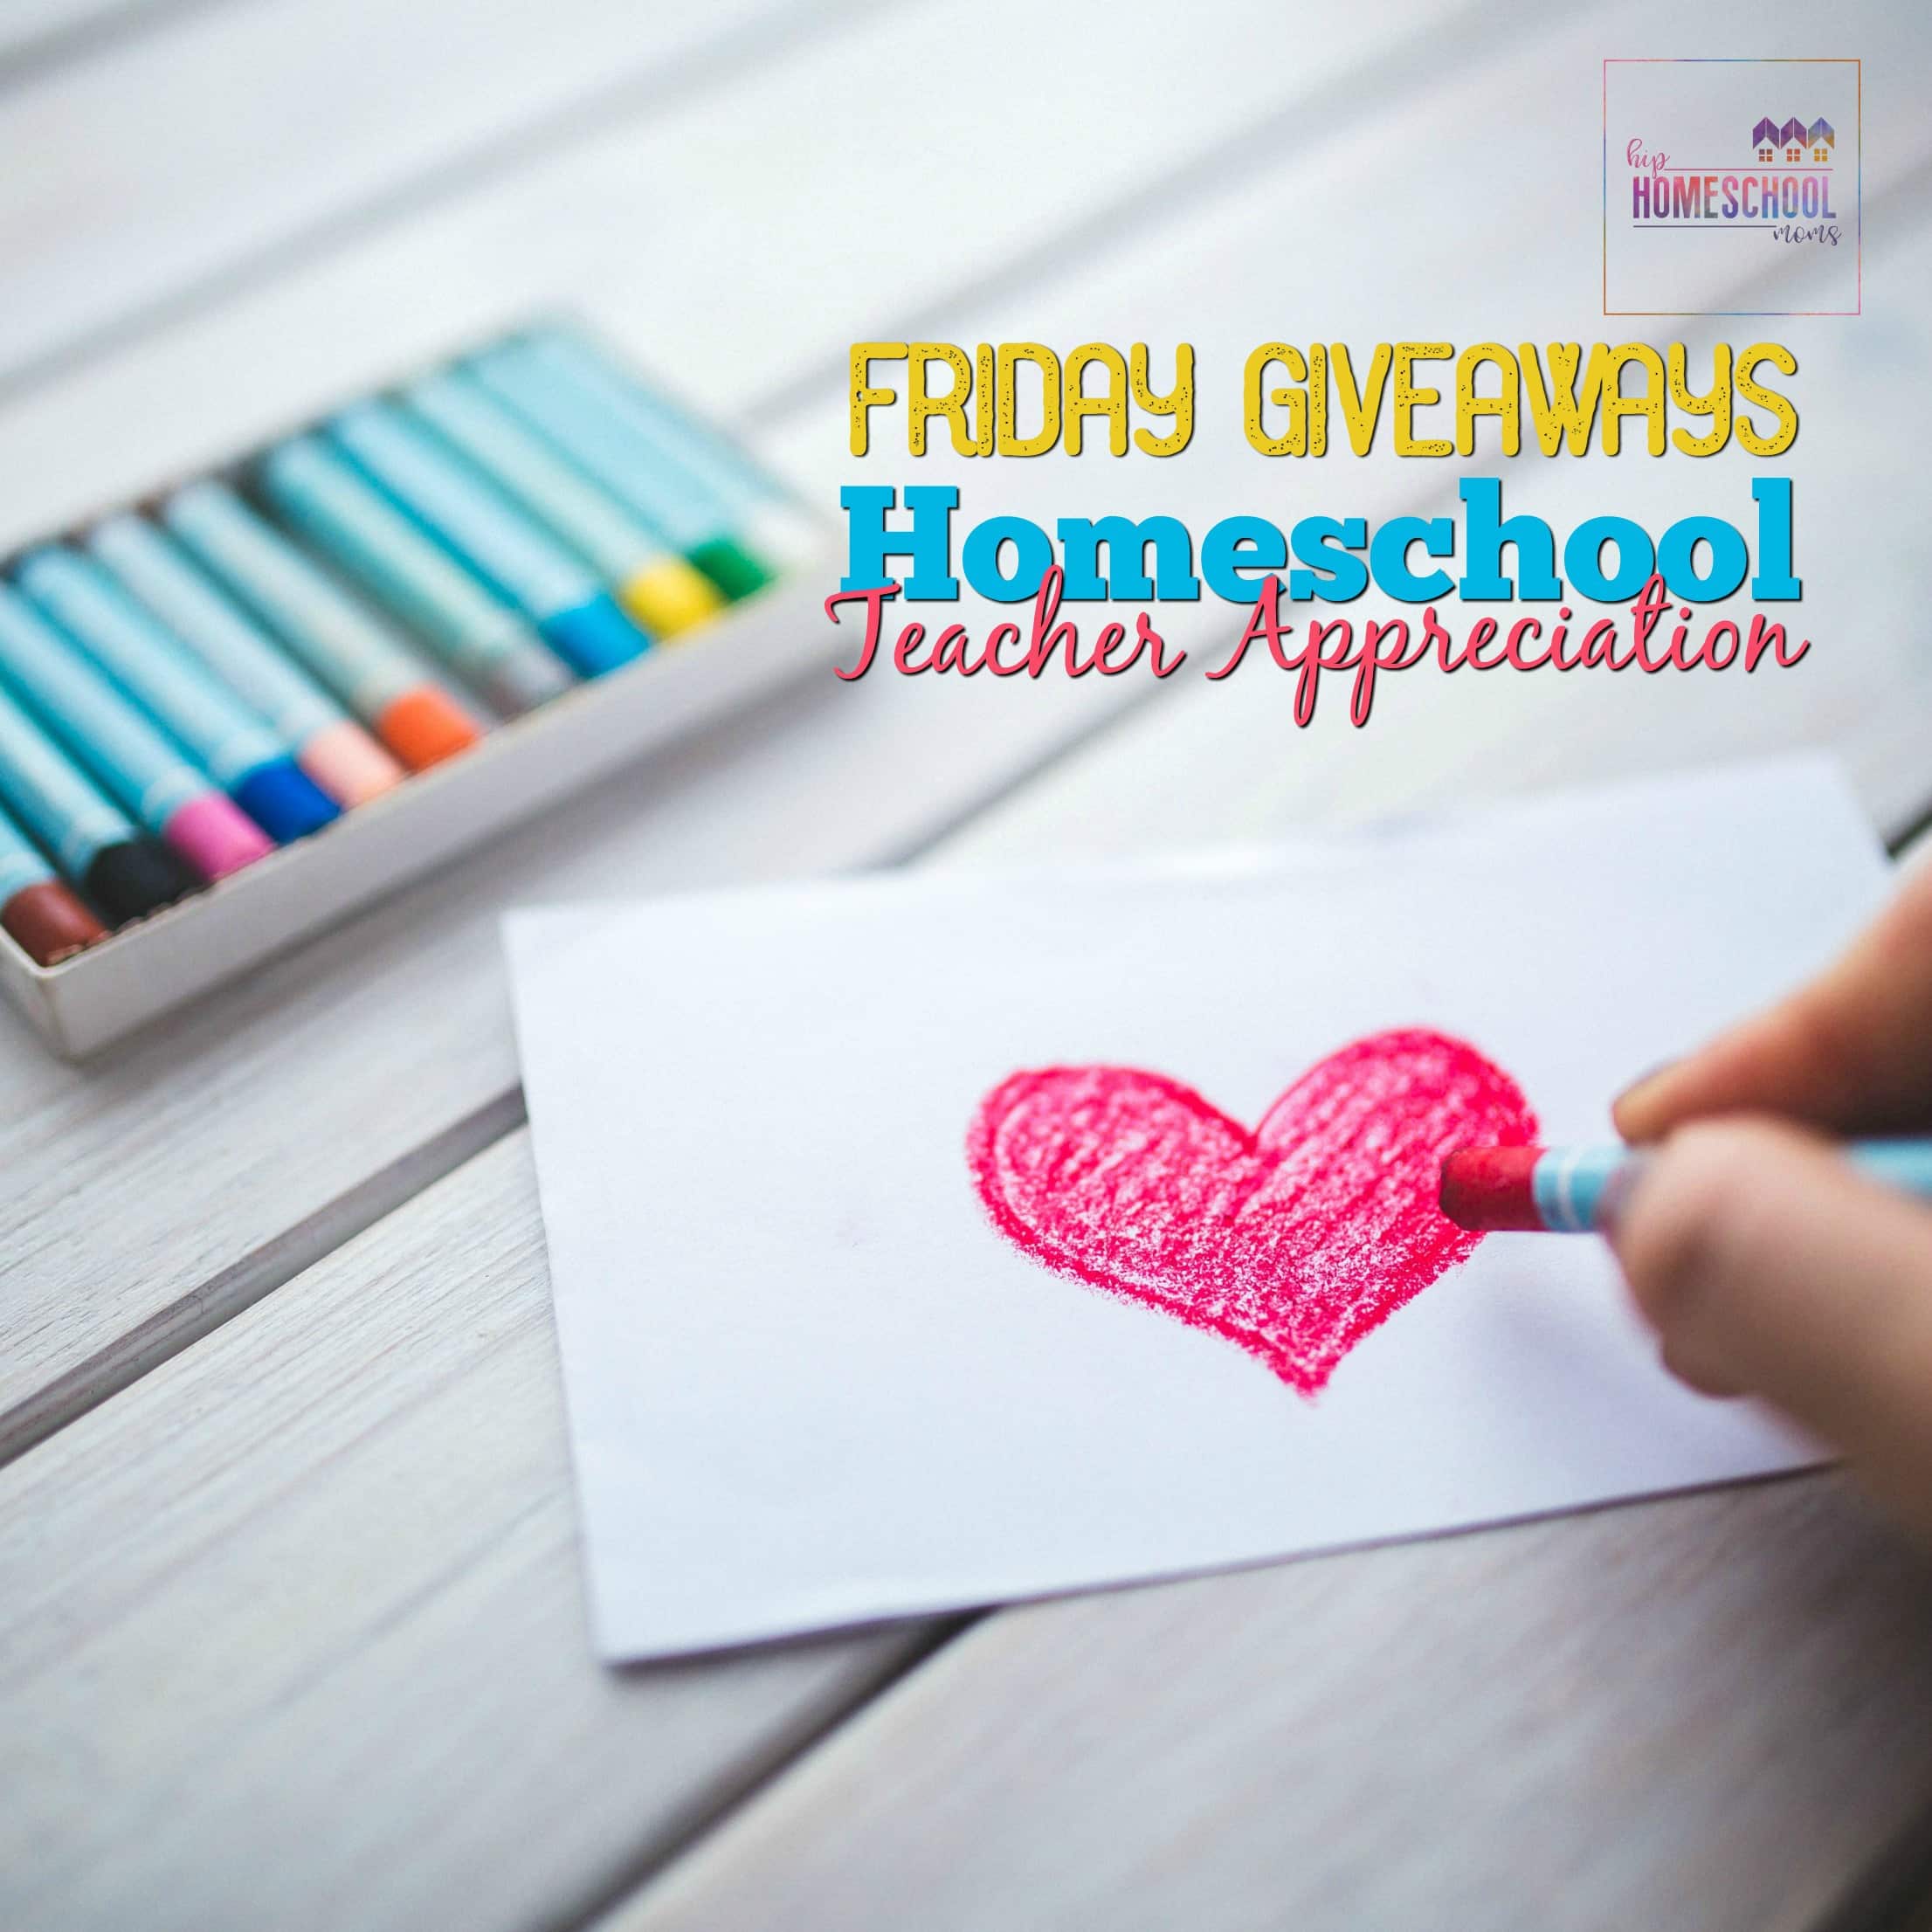 2017 Homeschool Teacher Appreciation Friday Giveaways